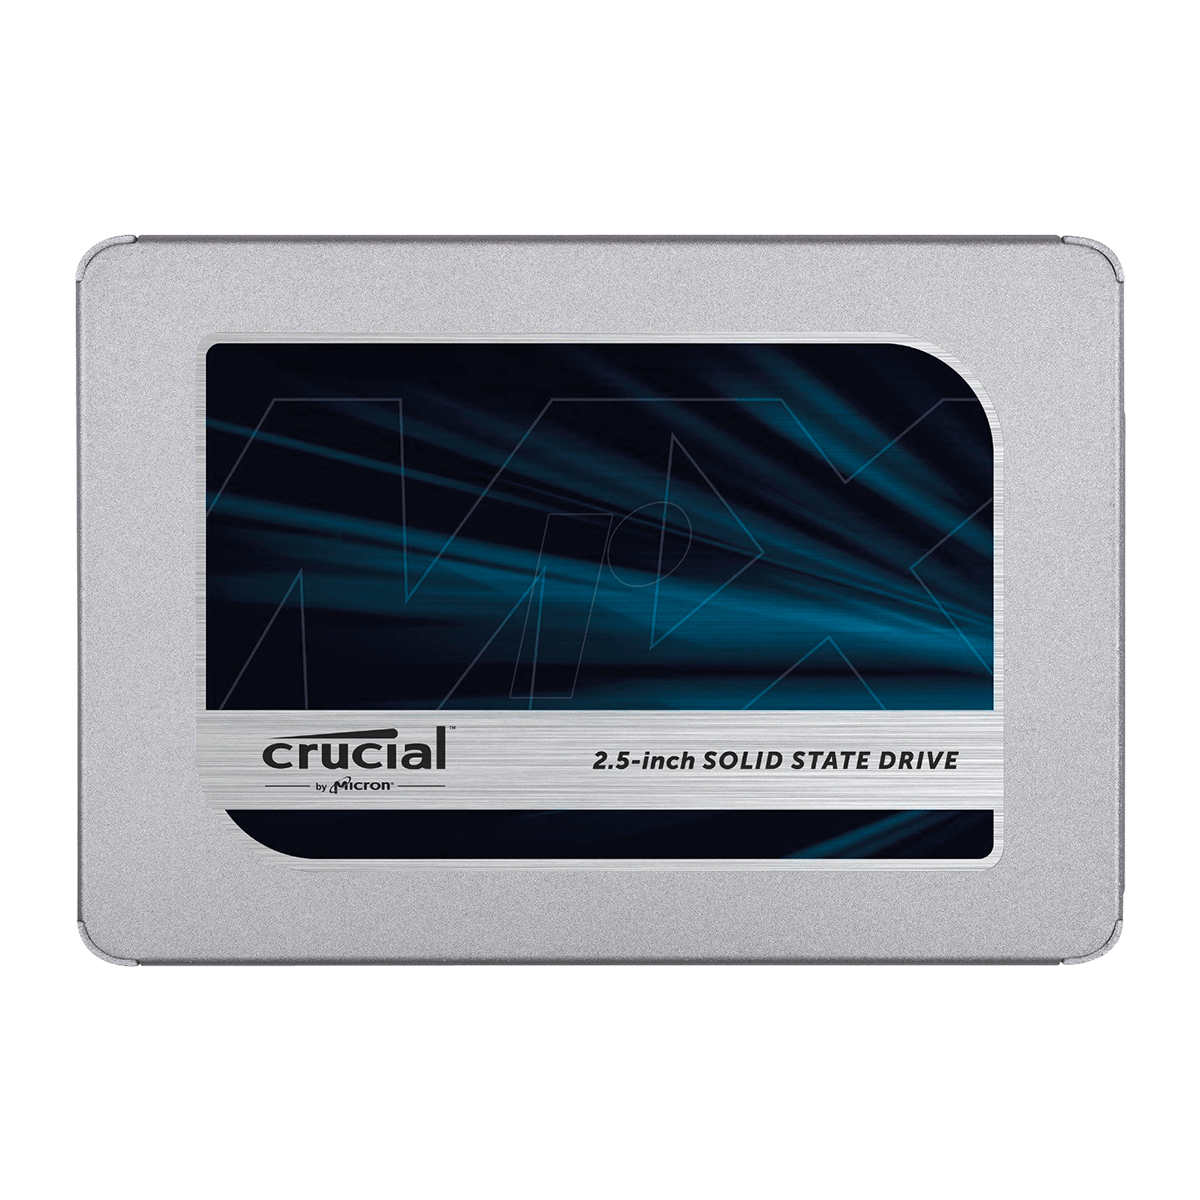 Crucial MX500 250GB SATA 2.5-inch, SATA 6.0Gb/s 7mm Solid State Drive